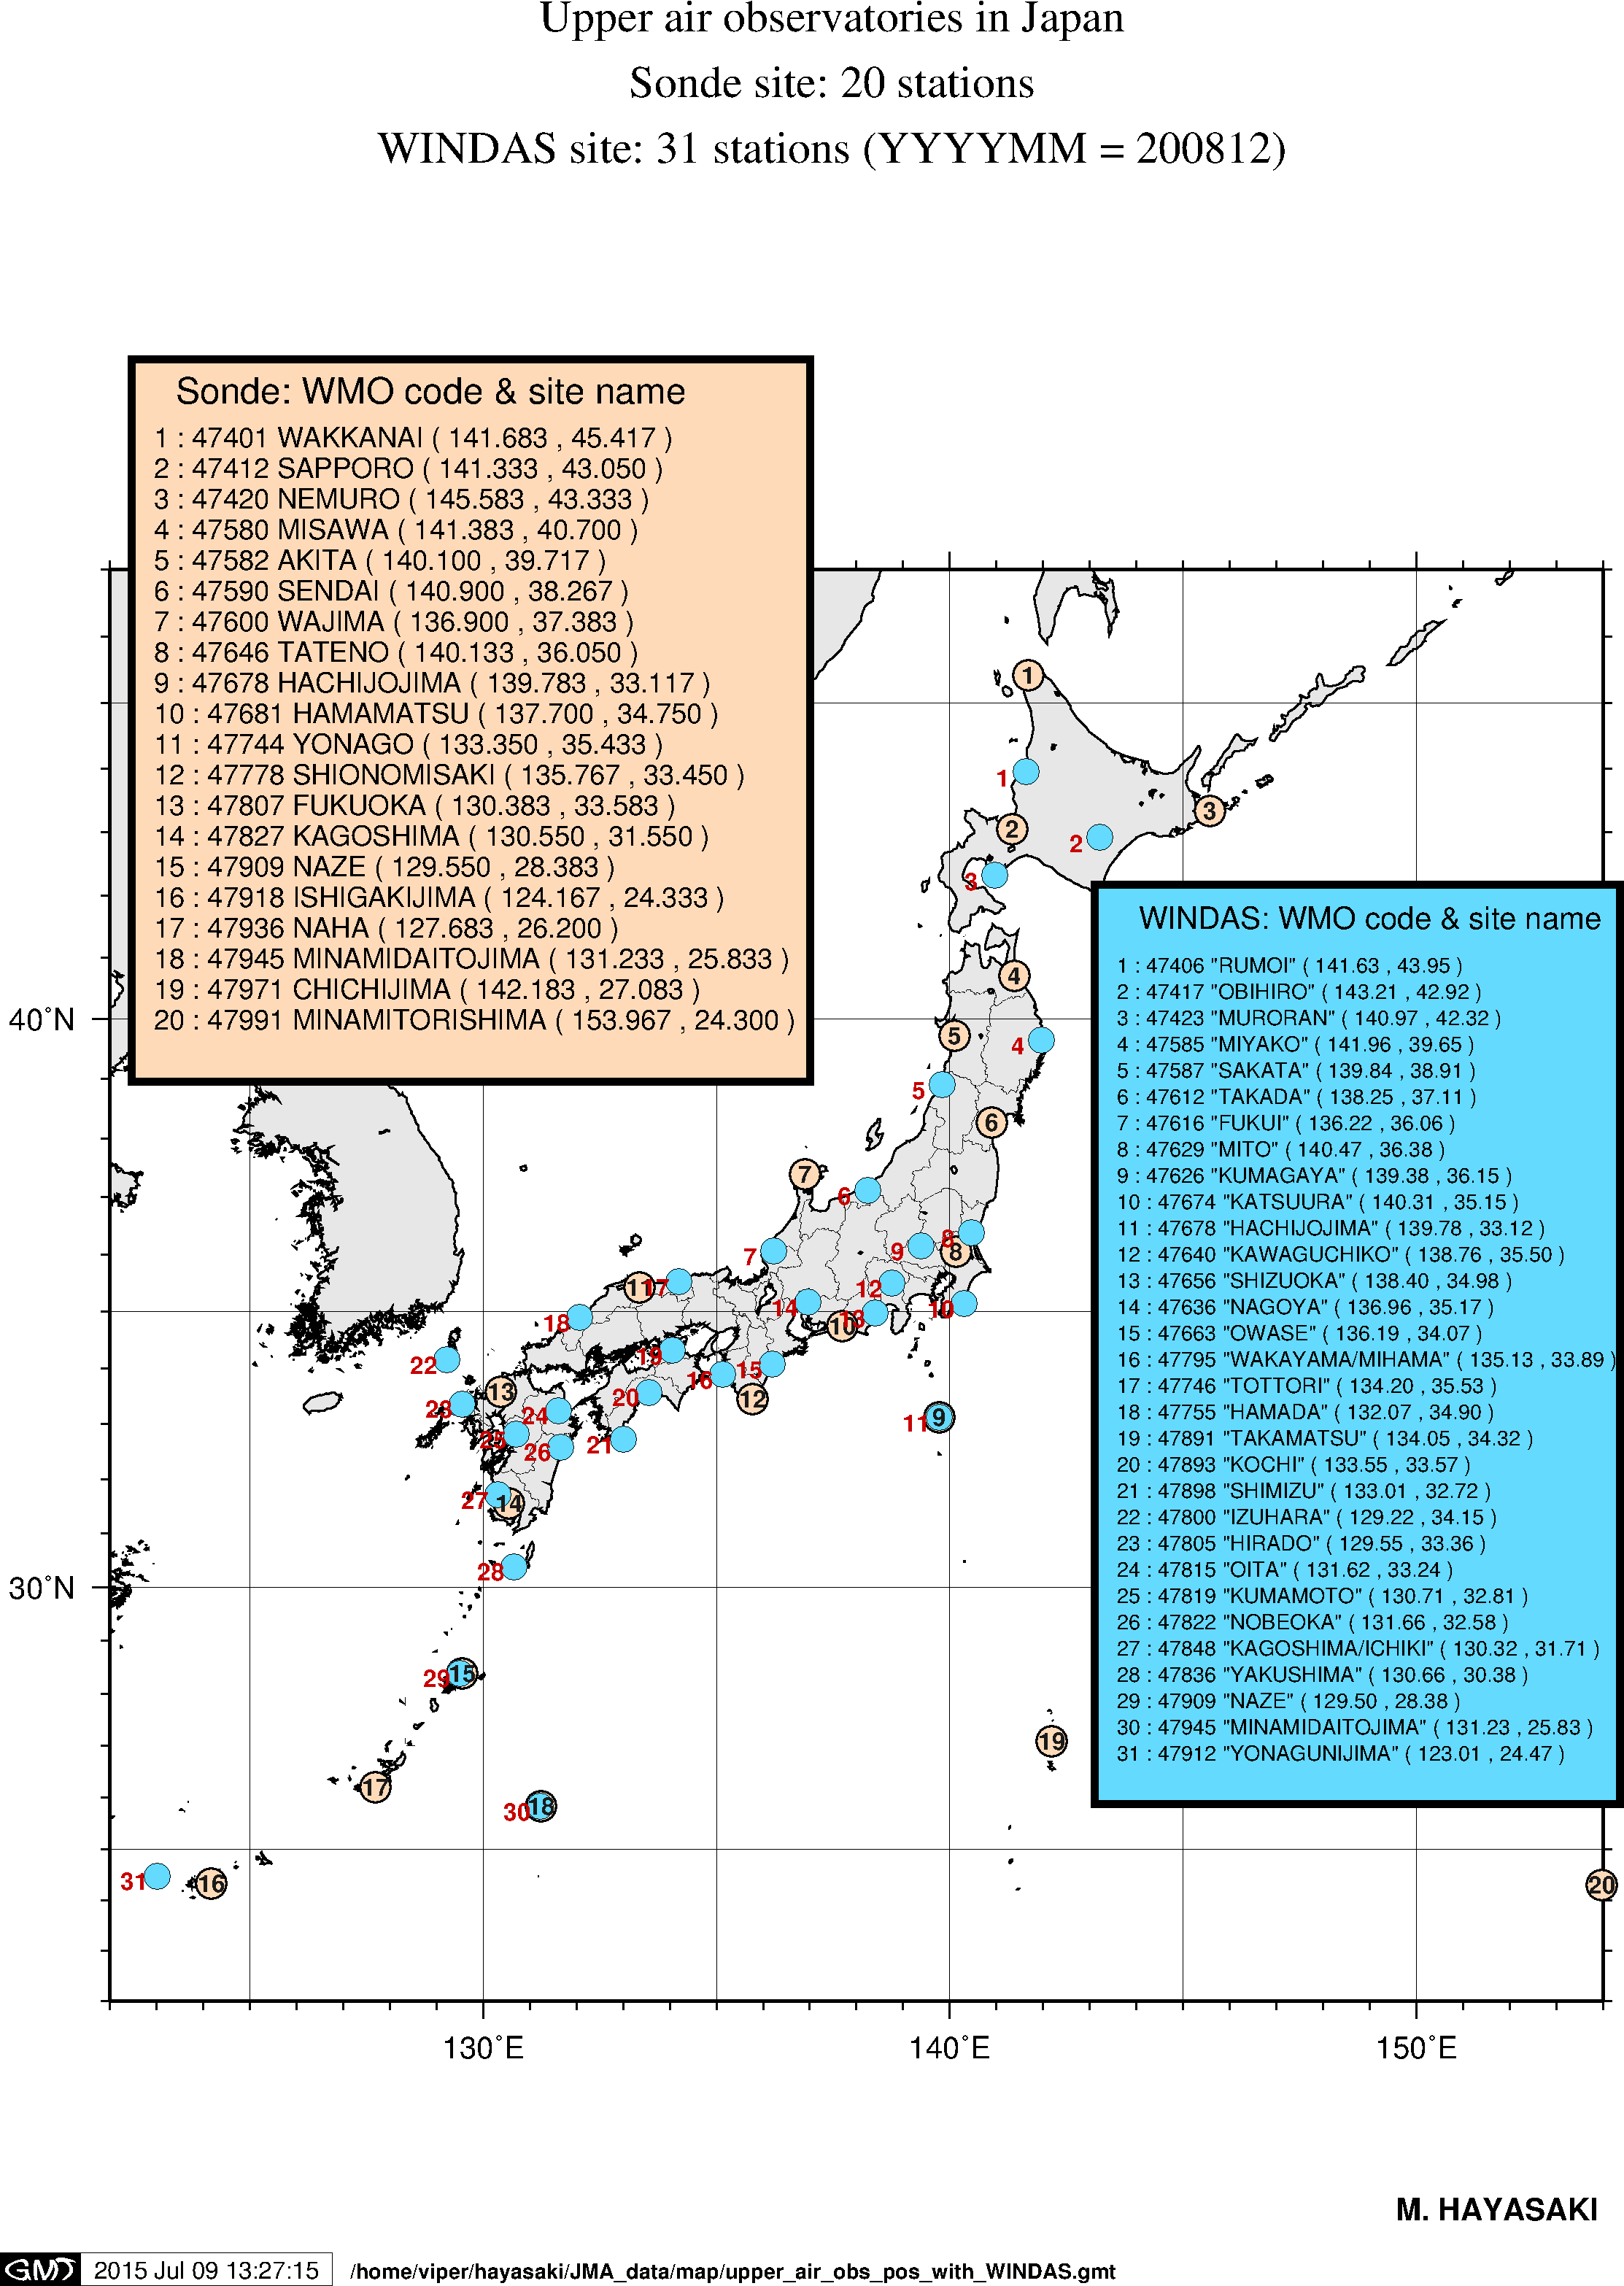 upper air sounding and WINDAS sites in Japan (Dec2008)